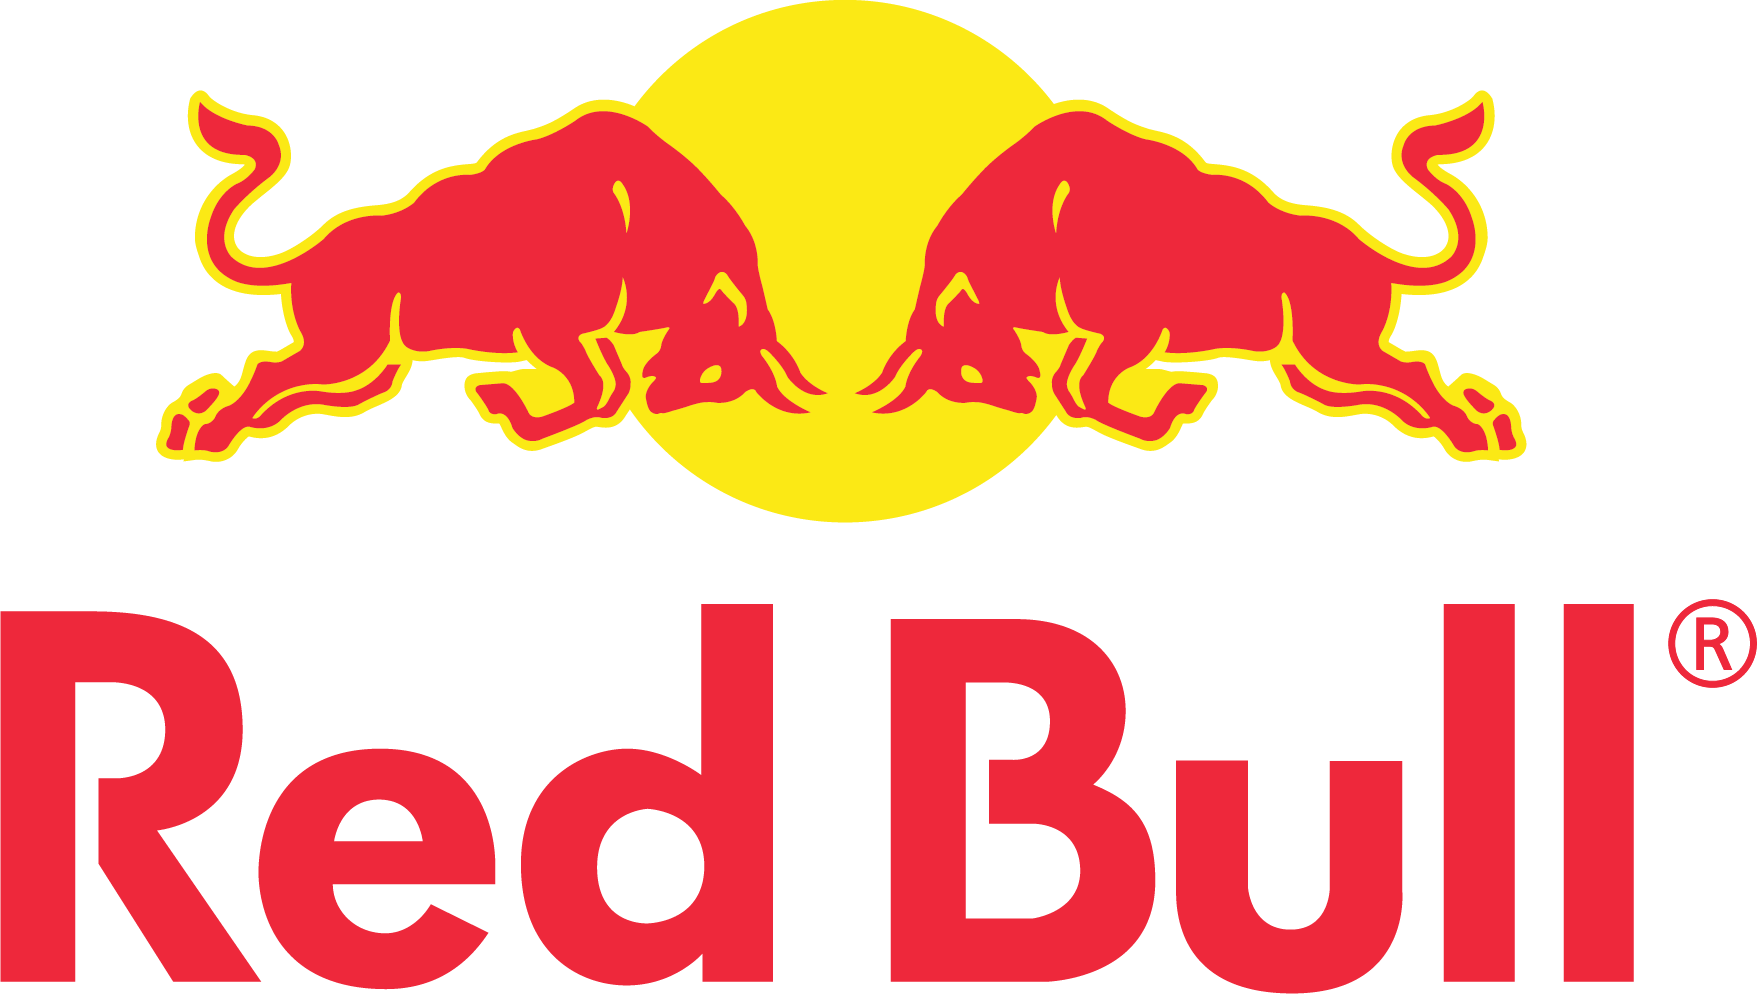 red-bull-seeklogo.com [Converted].png